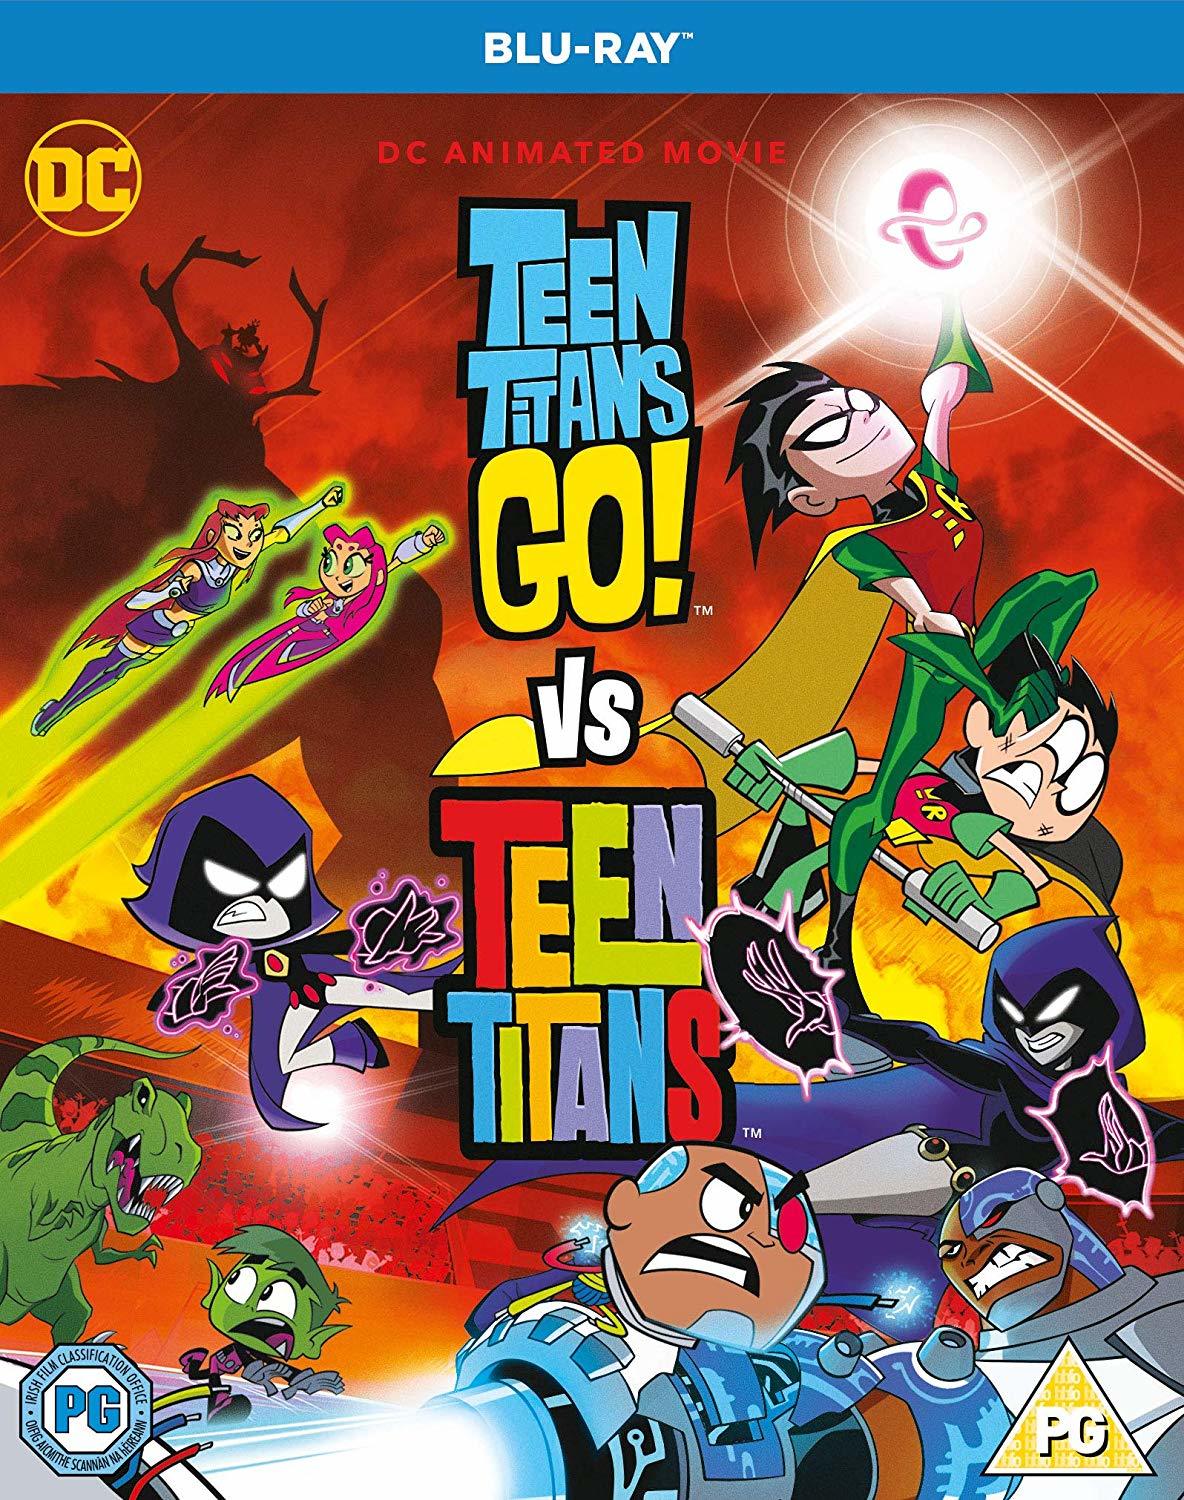 Teen Titans Go! Vs Teen Titans (2019) [AC3 5.1 + SUP] [Blu Ray-Rip] [GOOGLEDRIVE*] 247438_front